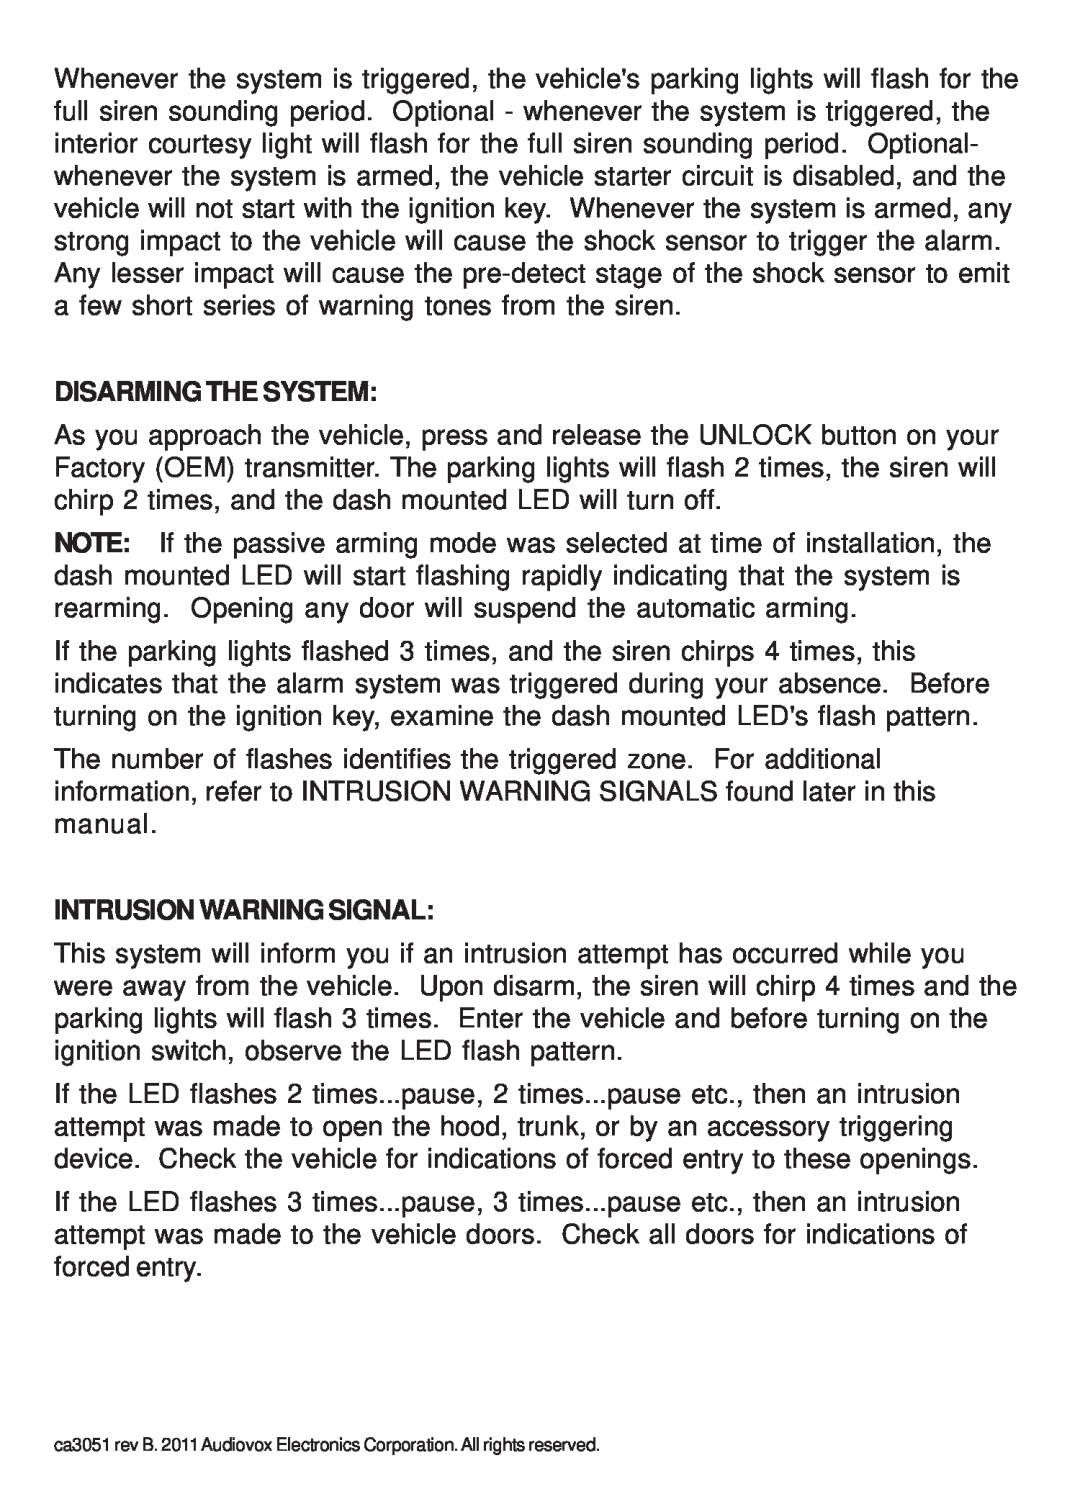 Audiovox CA 3051 manual Disarming The System, Intrusion Warning Signal 